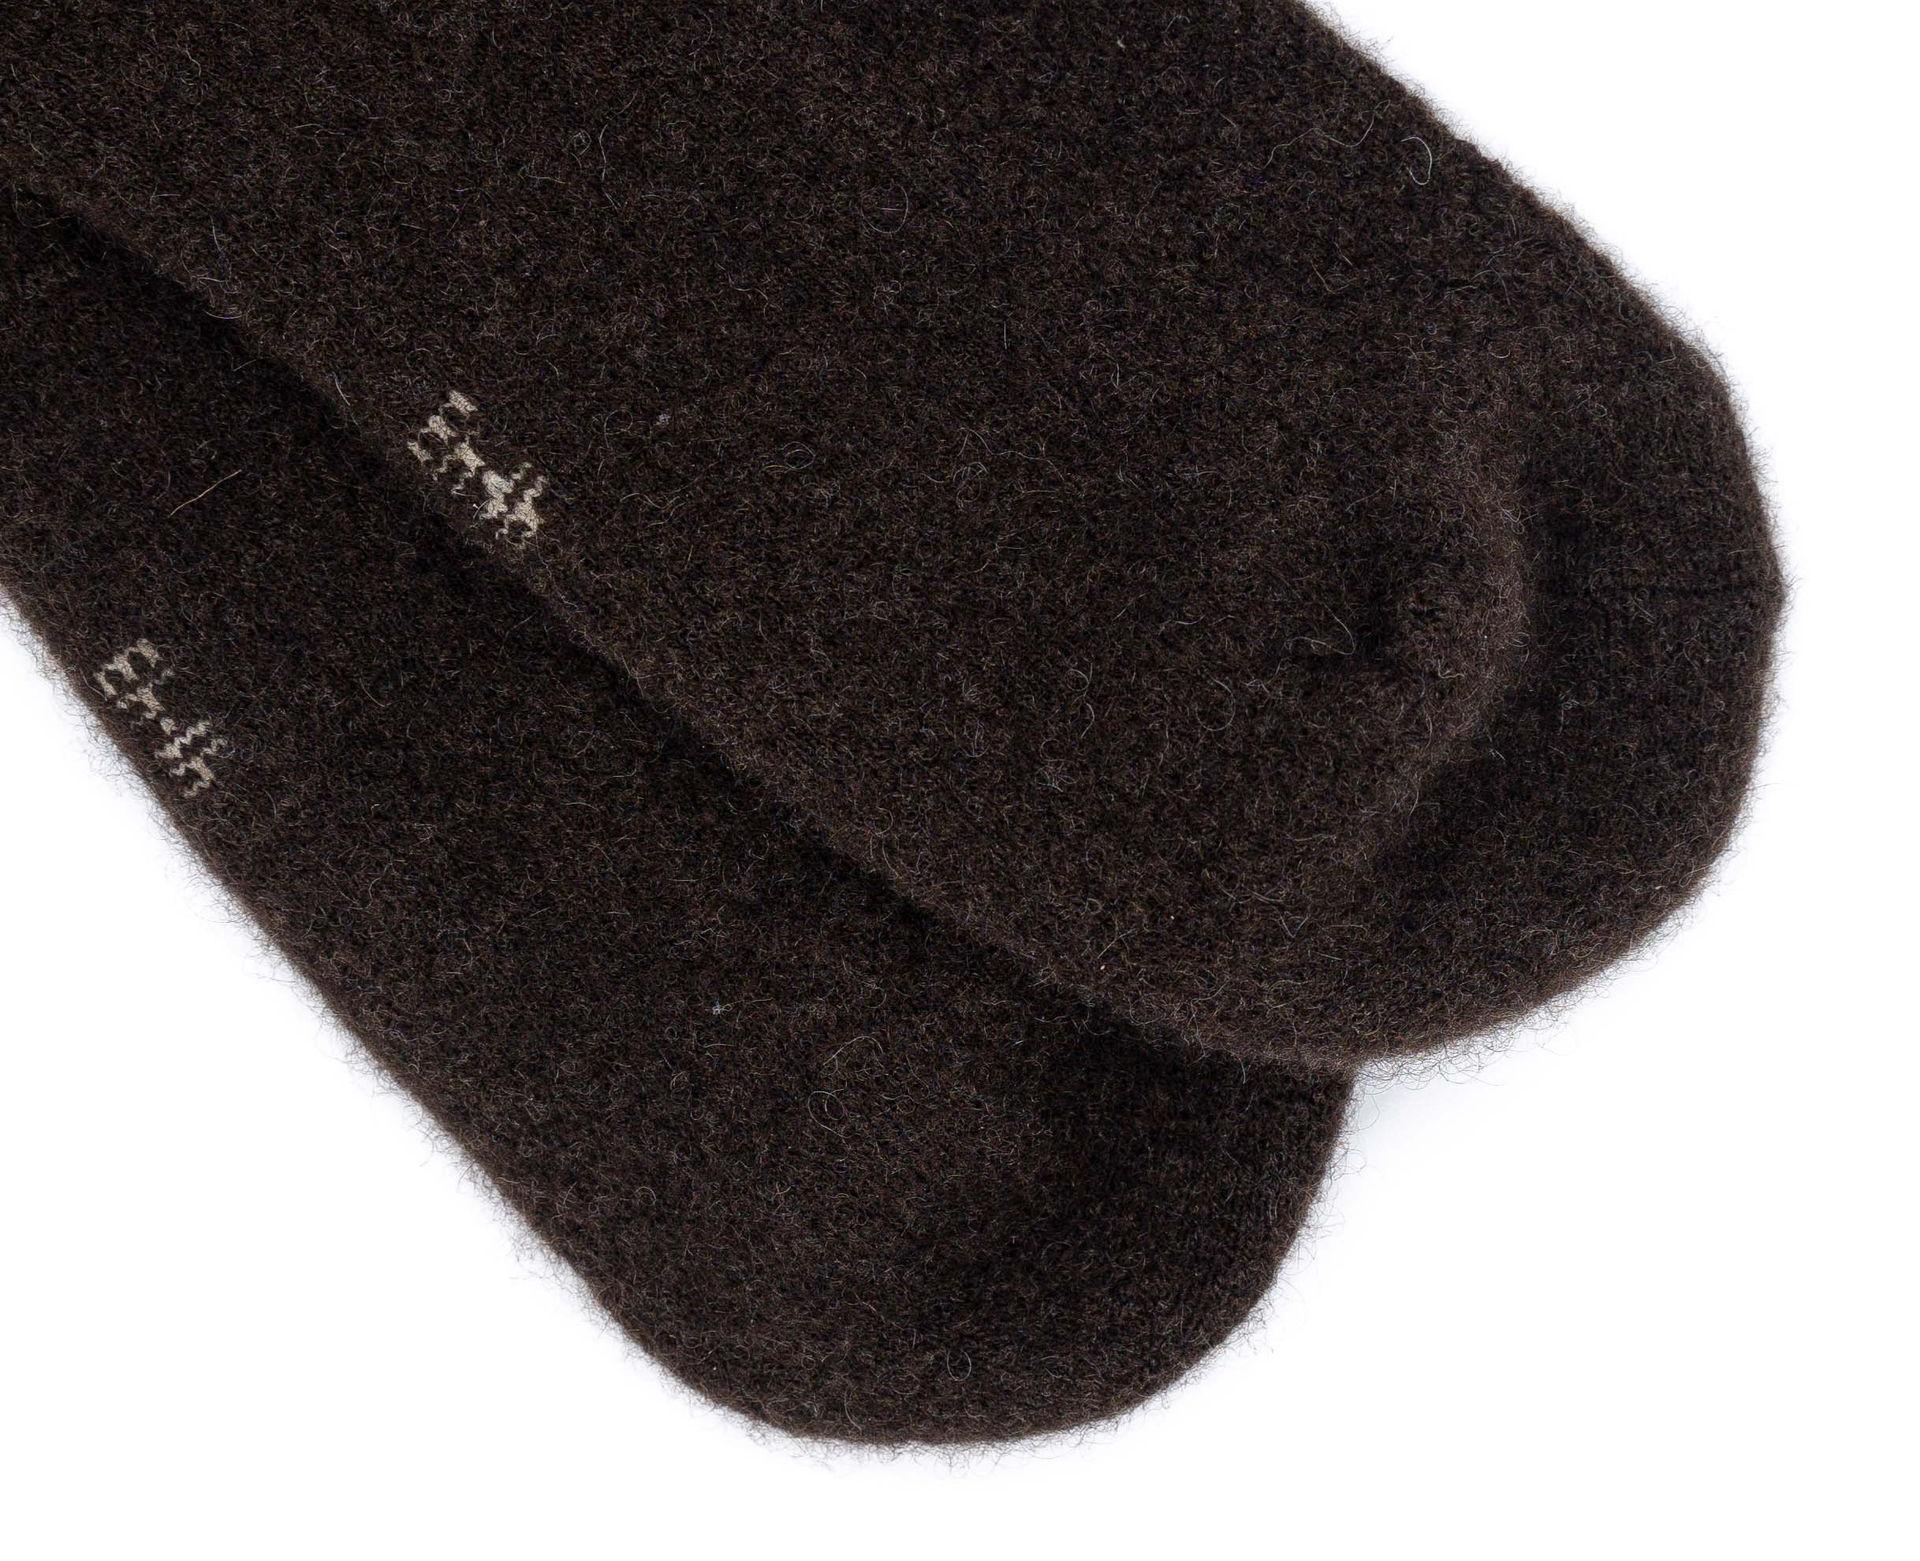 Detailbild eines dunkelbaunen Socken aus Yakwolle.